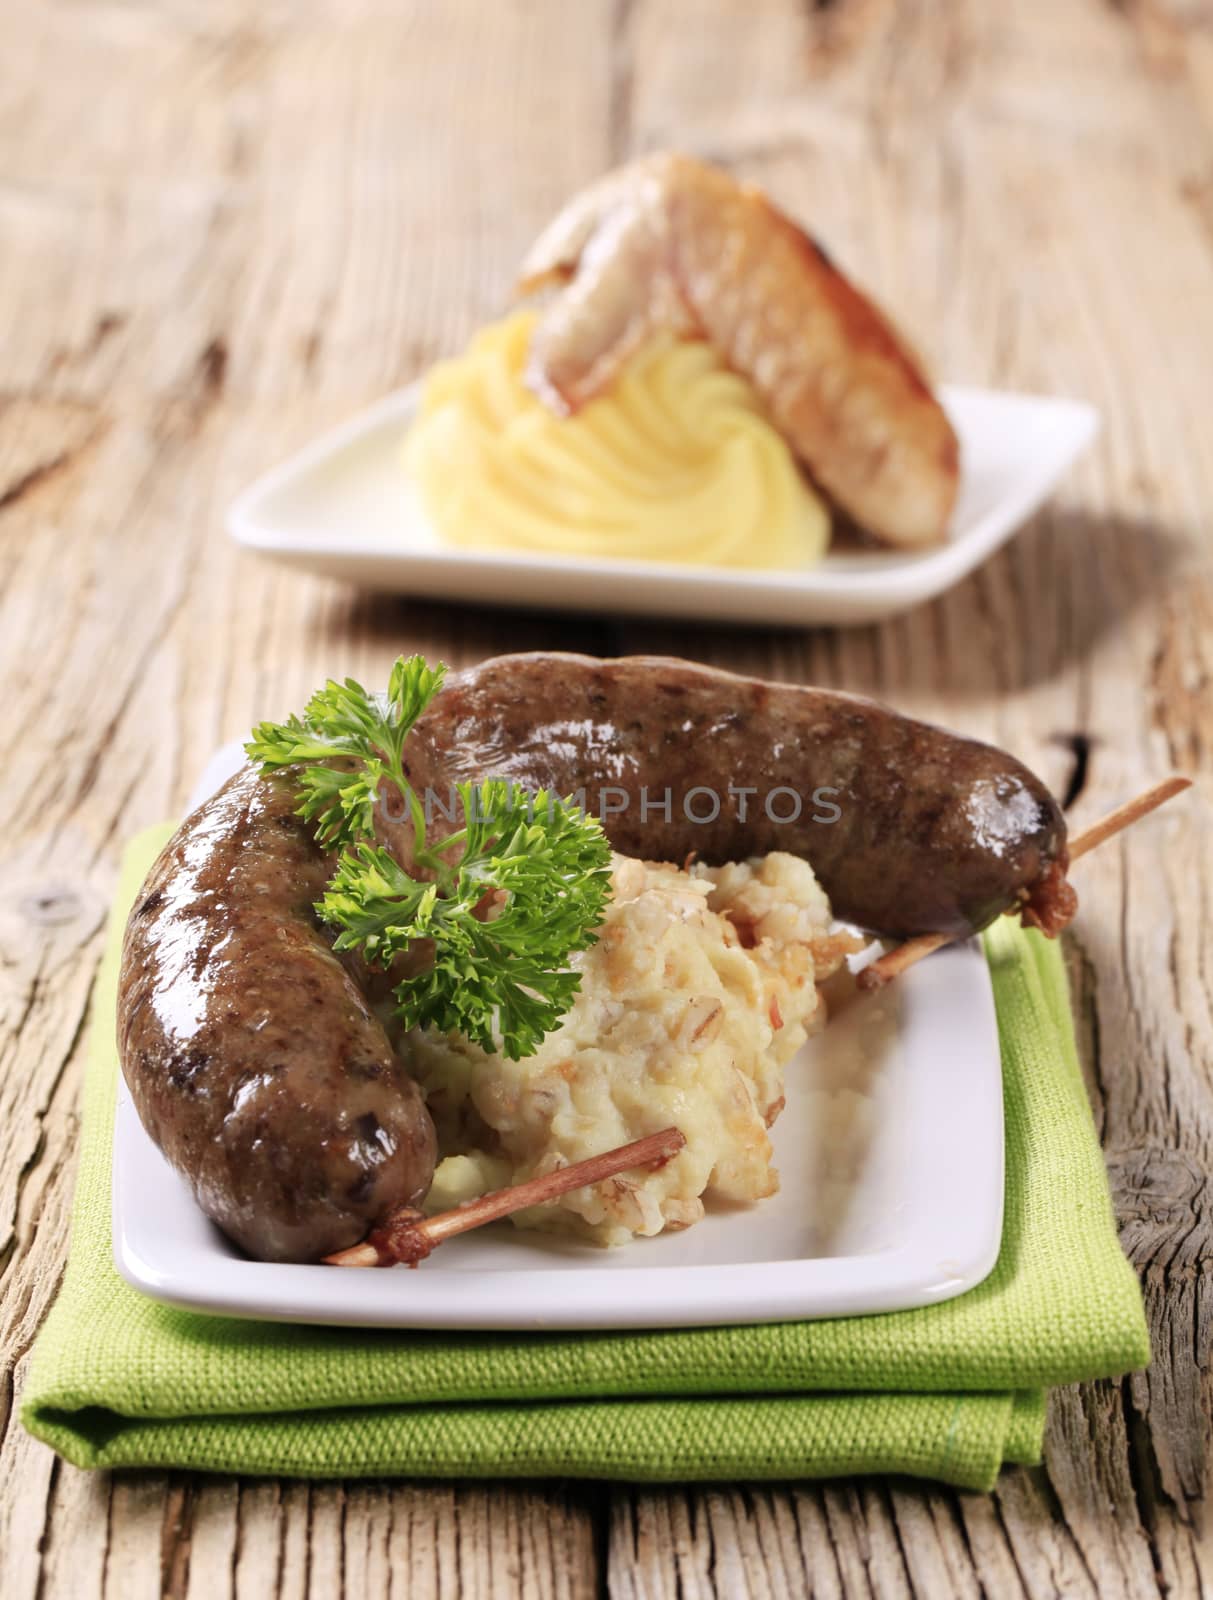 White pudding and mashed potato with peeled barley on wooden background